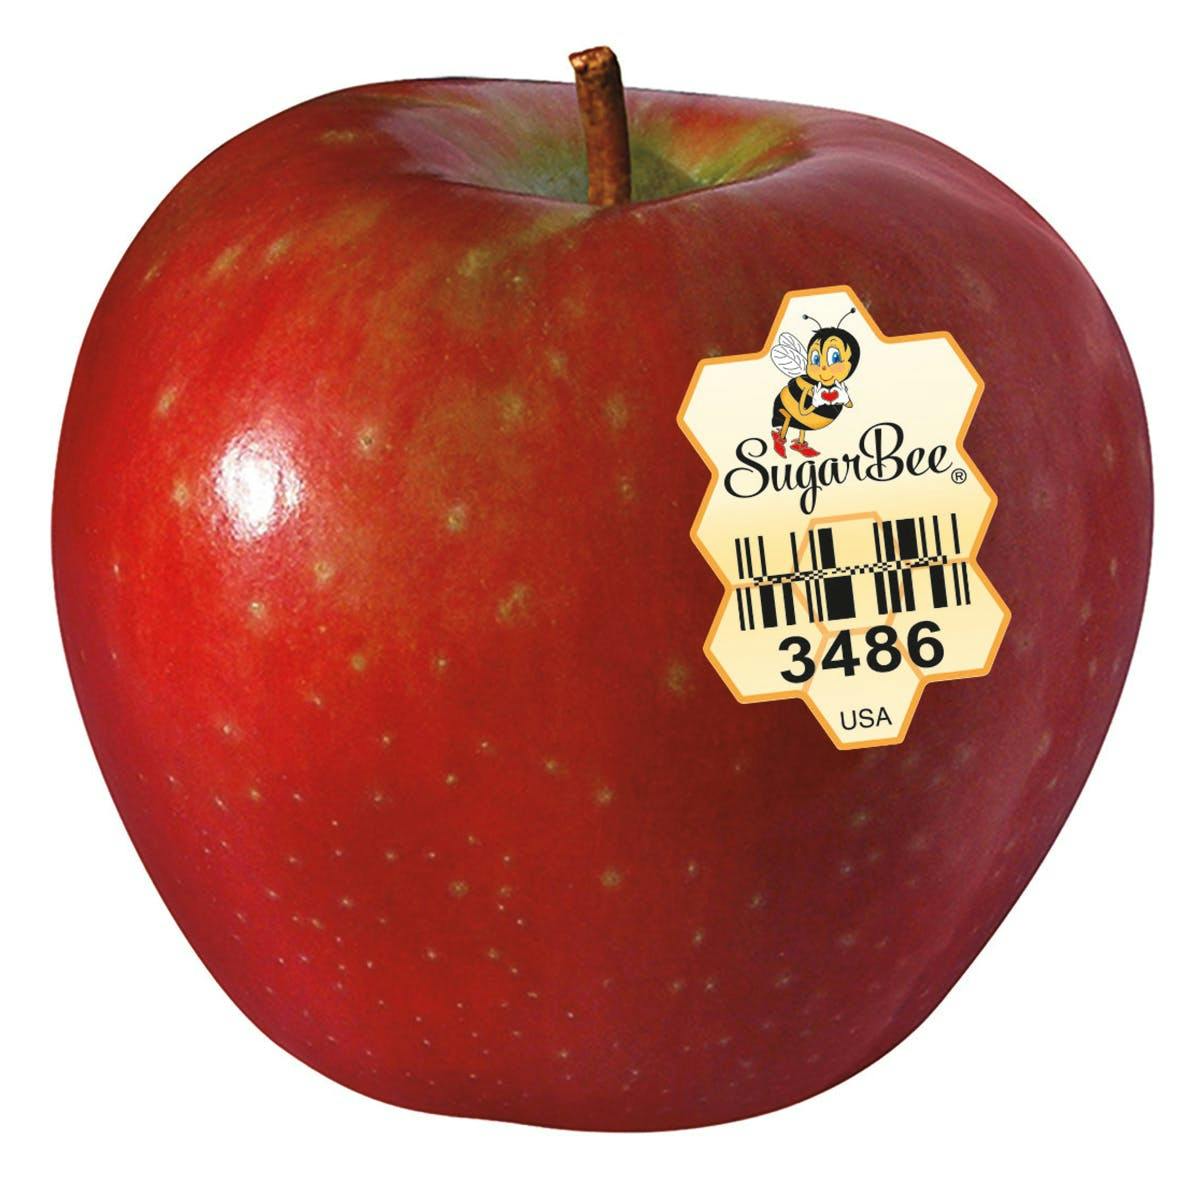 SugarBee * - Adam's Apples